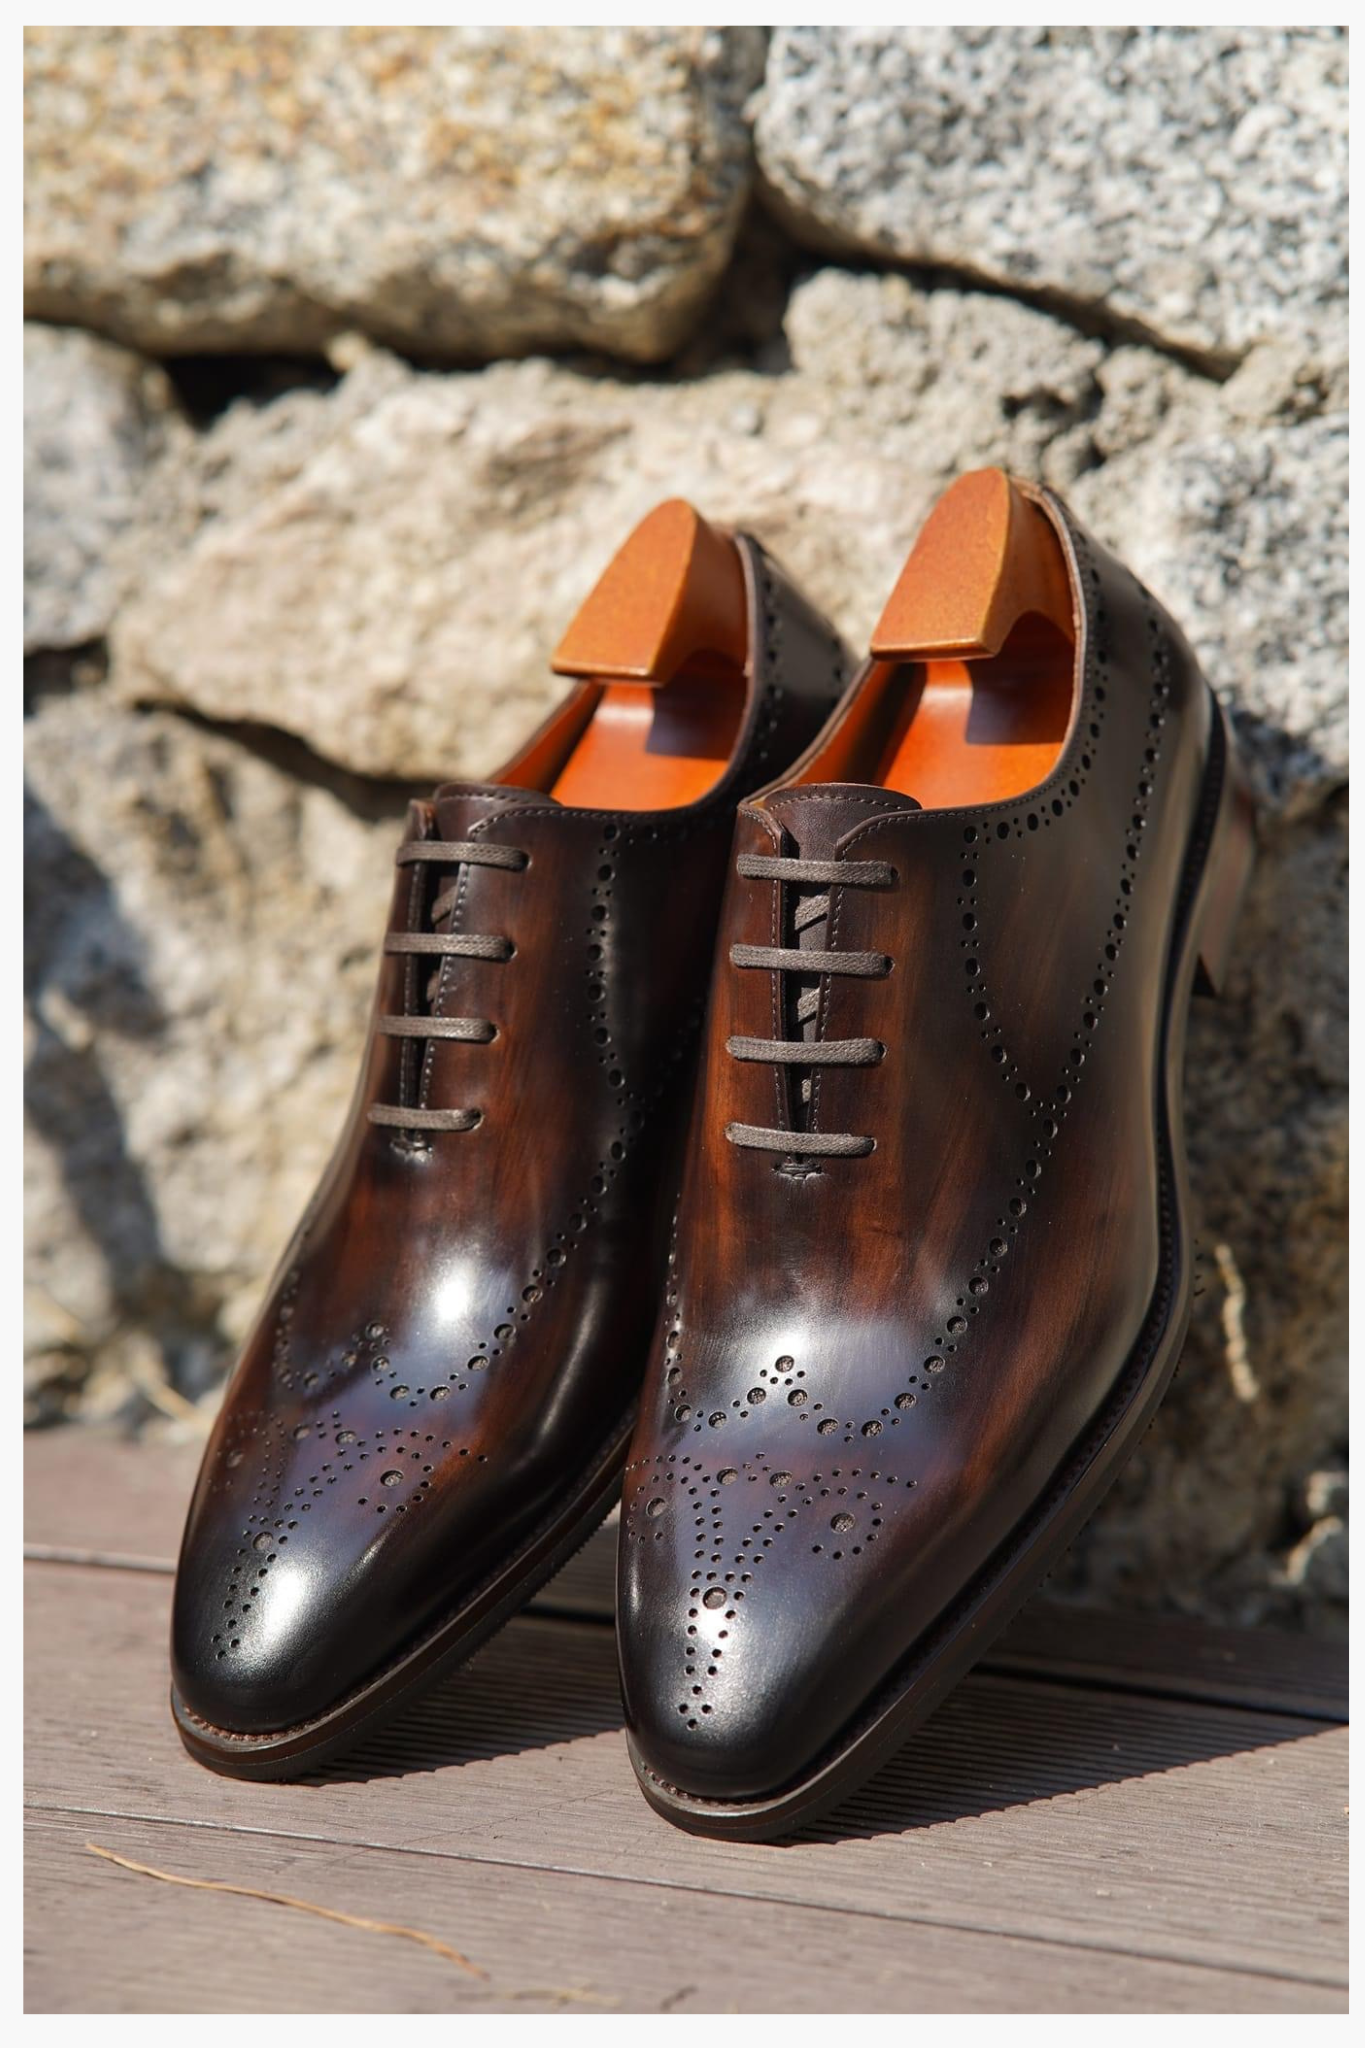 Cloewood Men's Handmade Men's Genuine Brown & Black Shaded Leather Oxford Brogue Formal Classic Wingtip Shoes